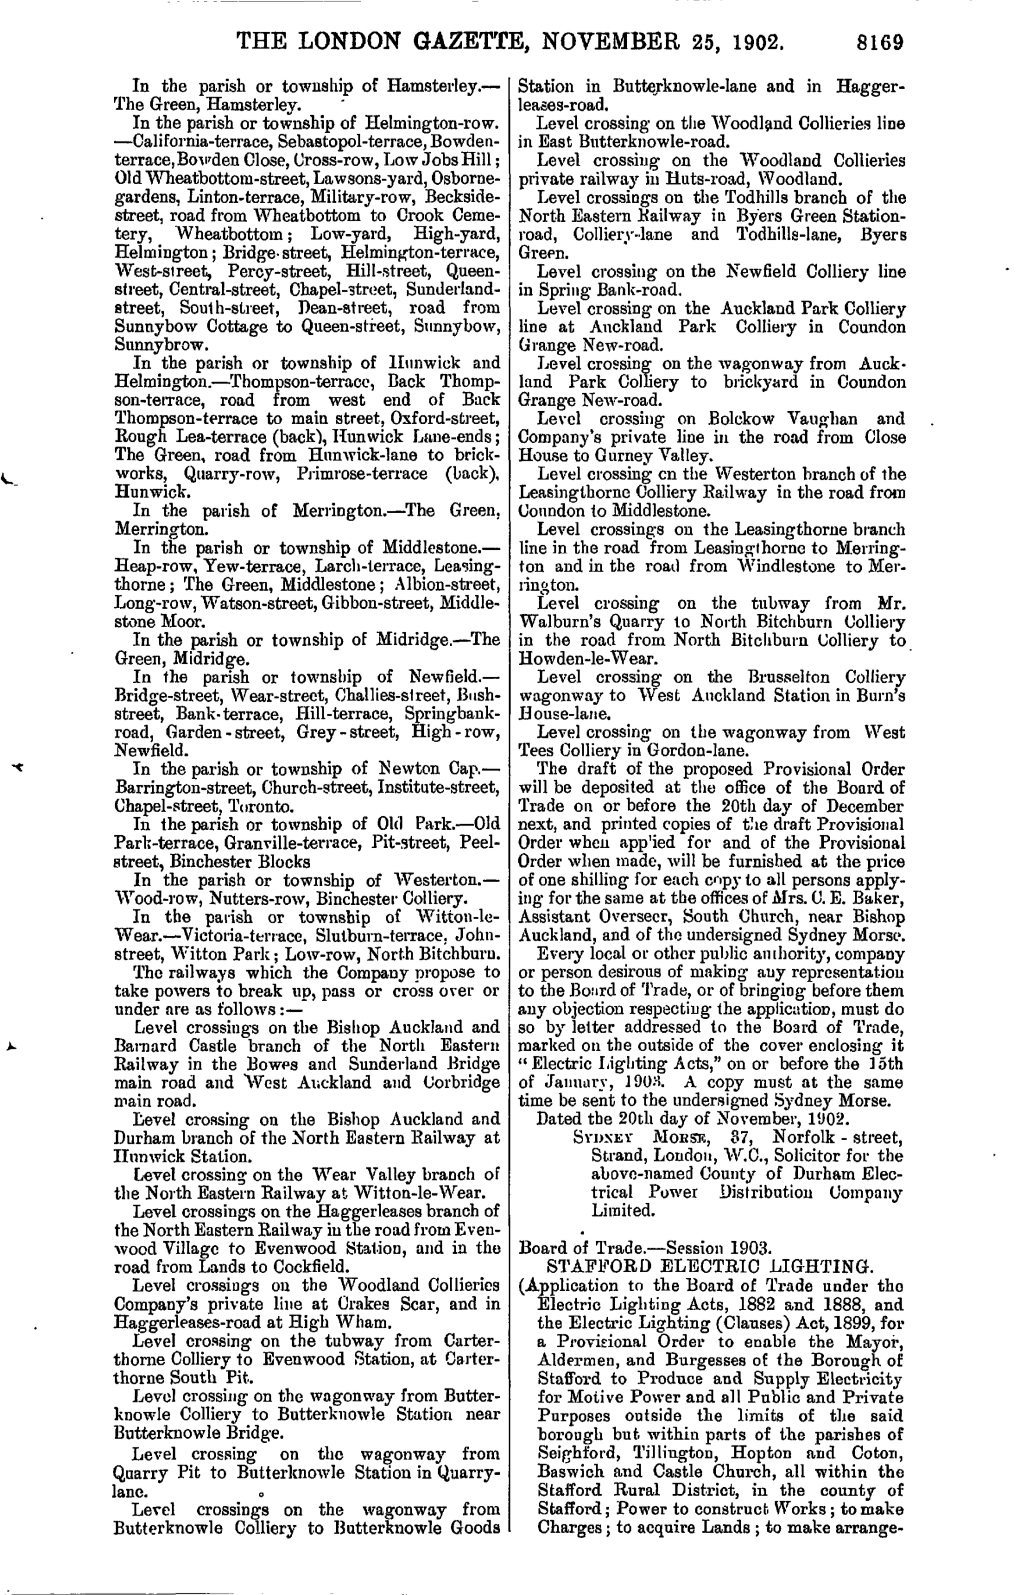 The London Gazette, November 25, 1902, 8169